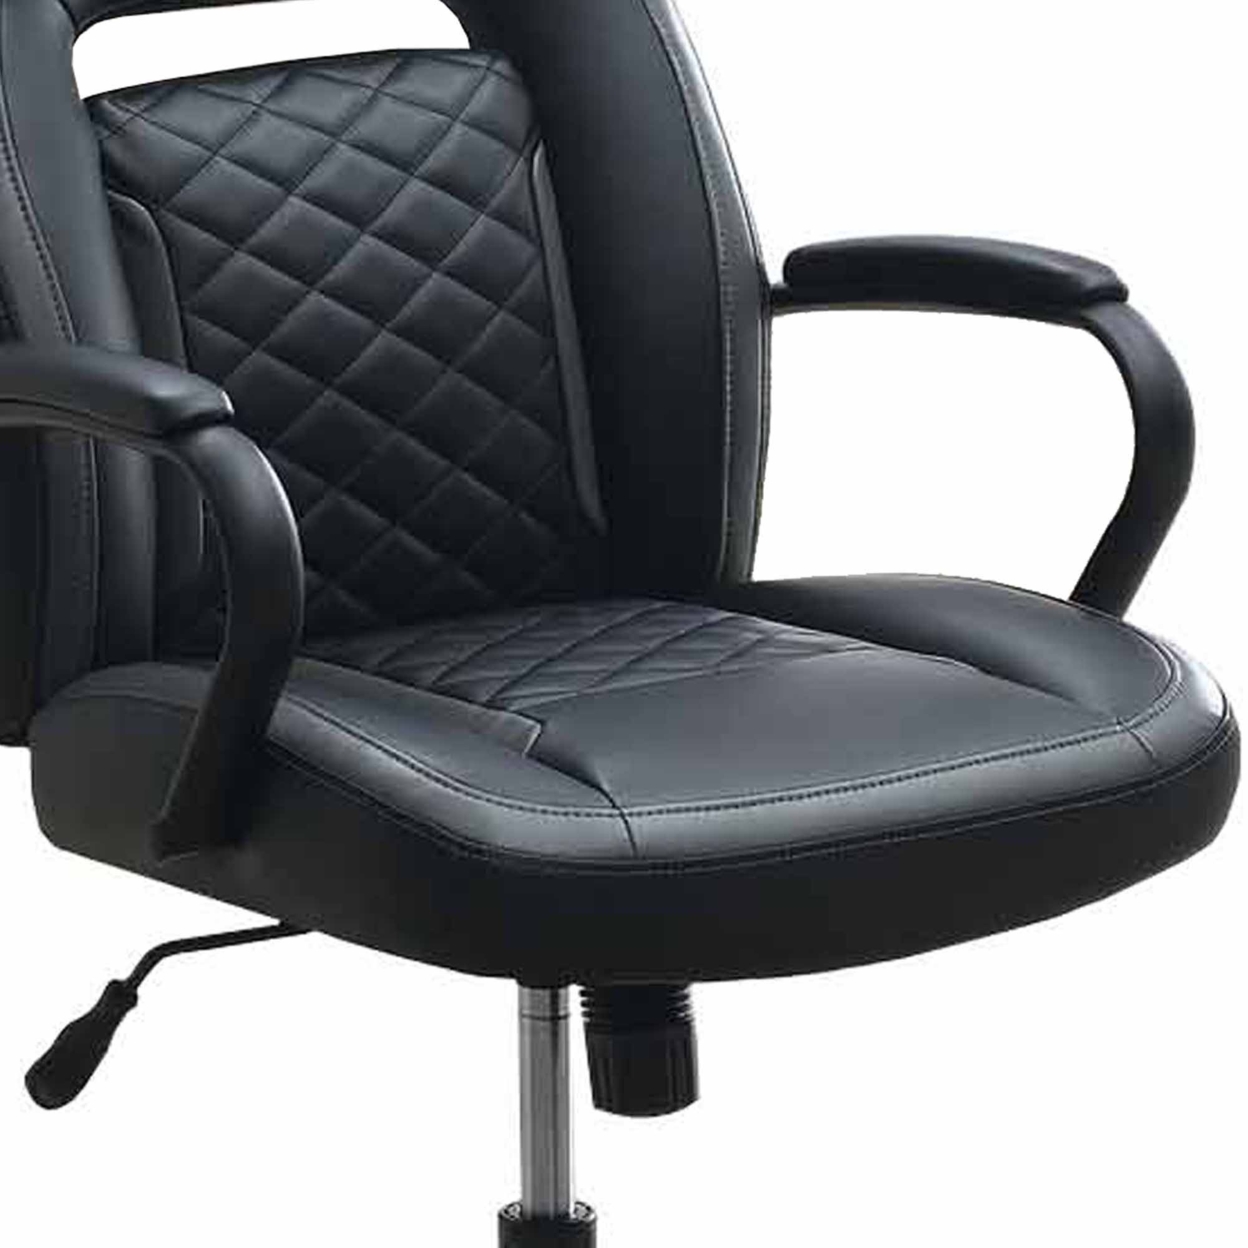 Ida 26 Inch Ergonomic Office Chair, Faux Leather Swivel Seat, Black, Gray- Saltoro Sherpi